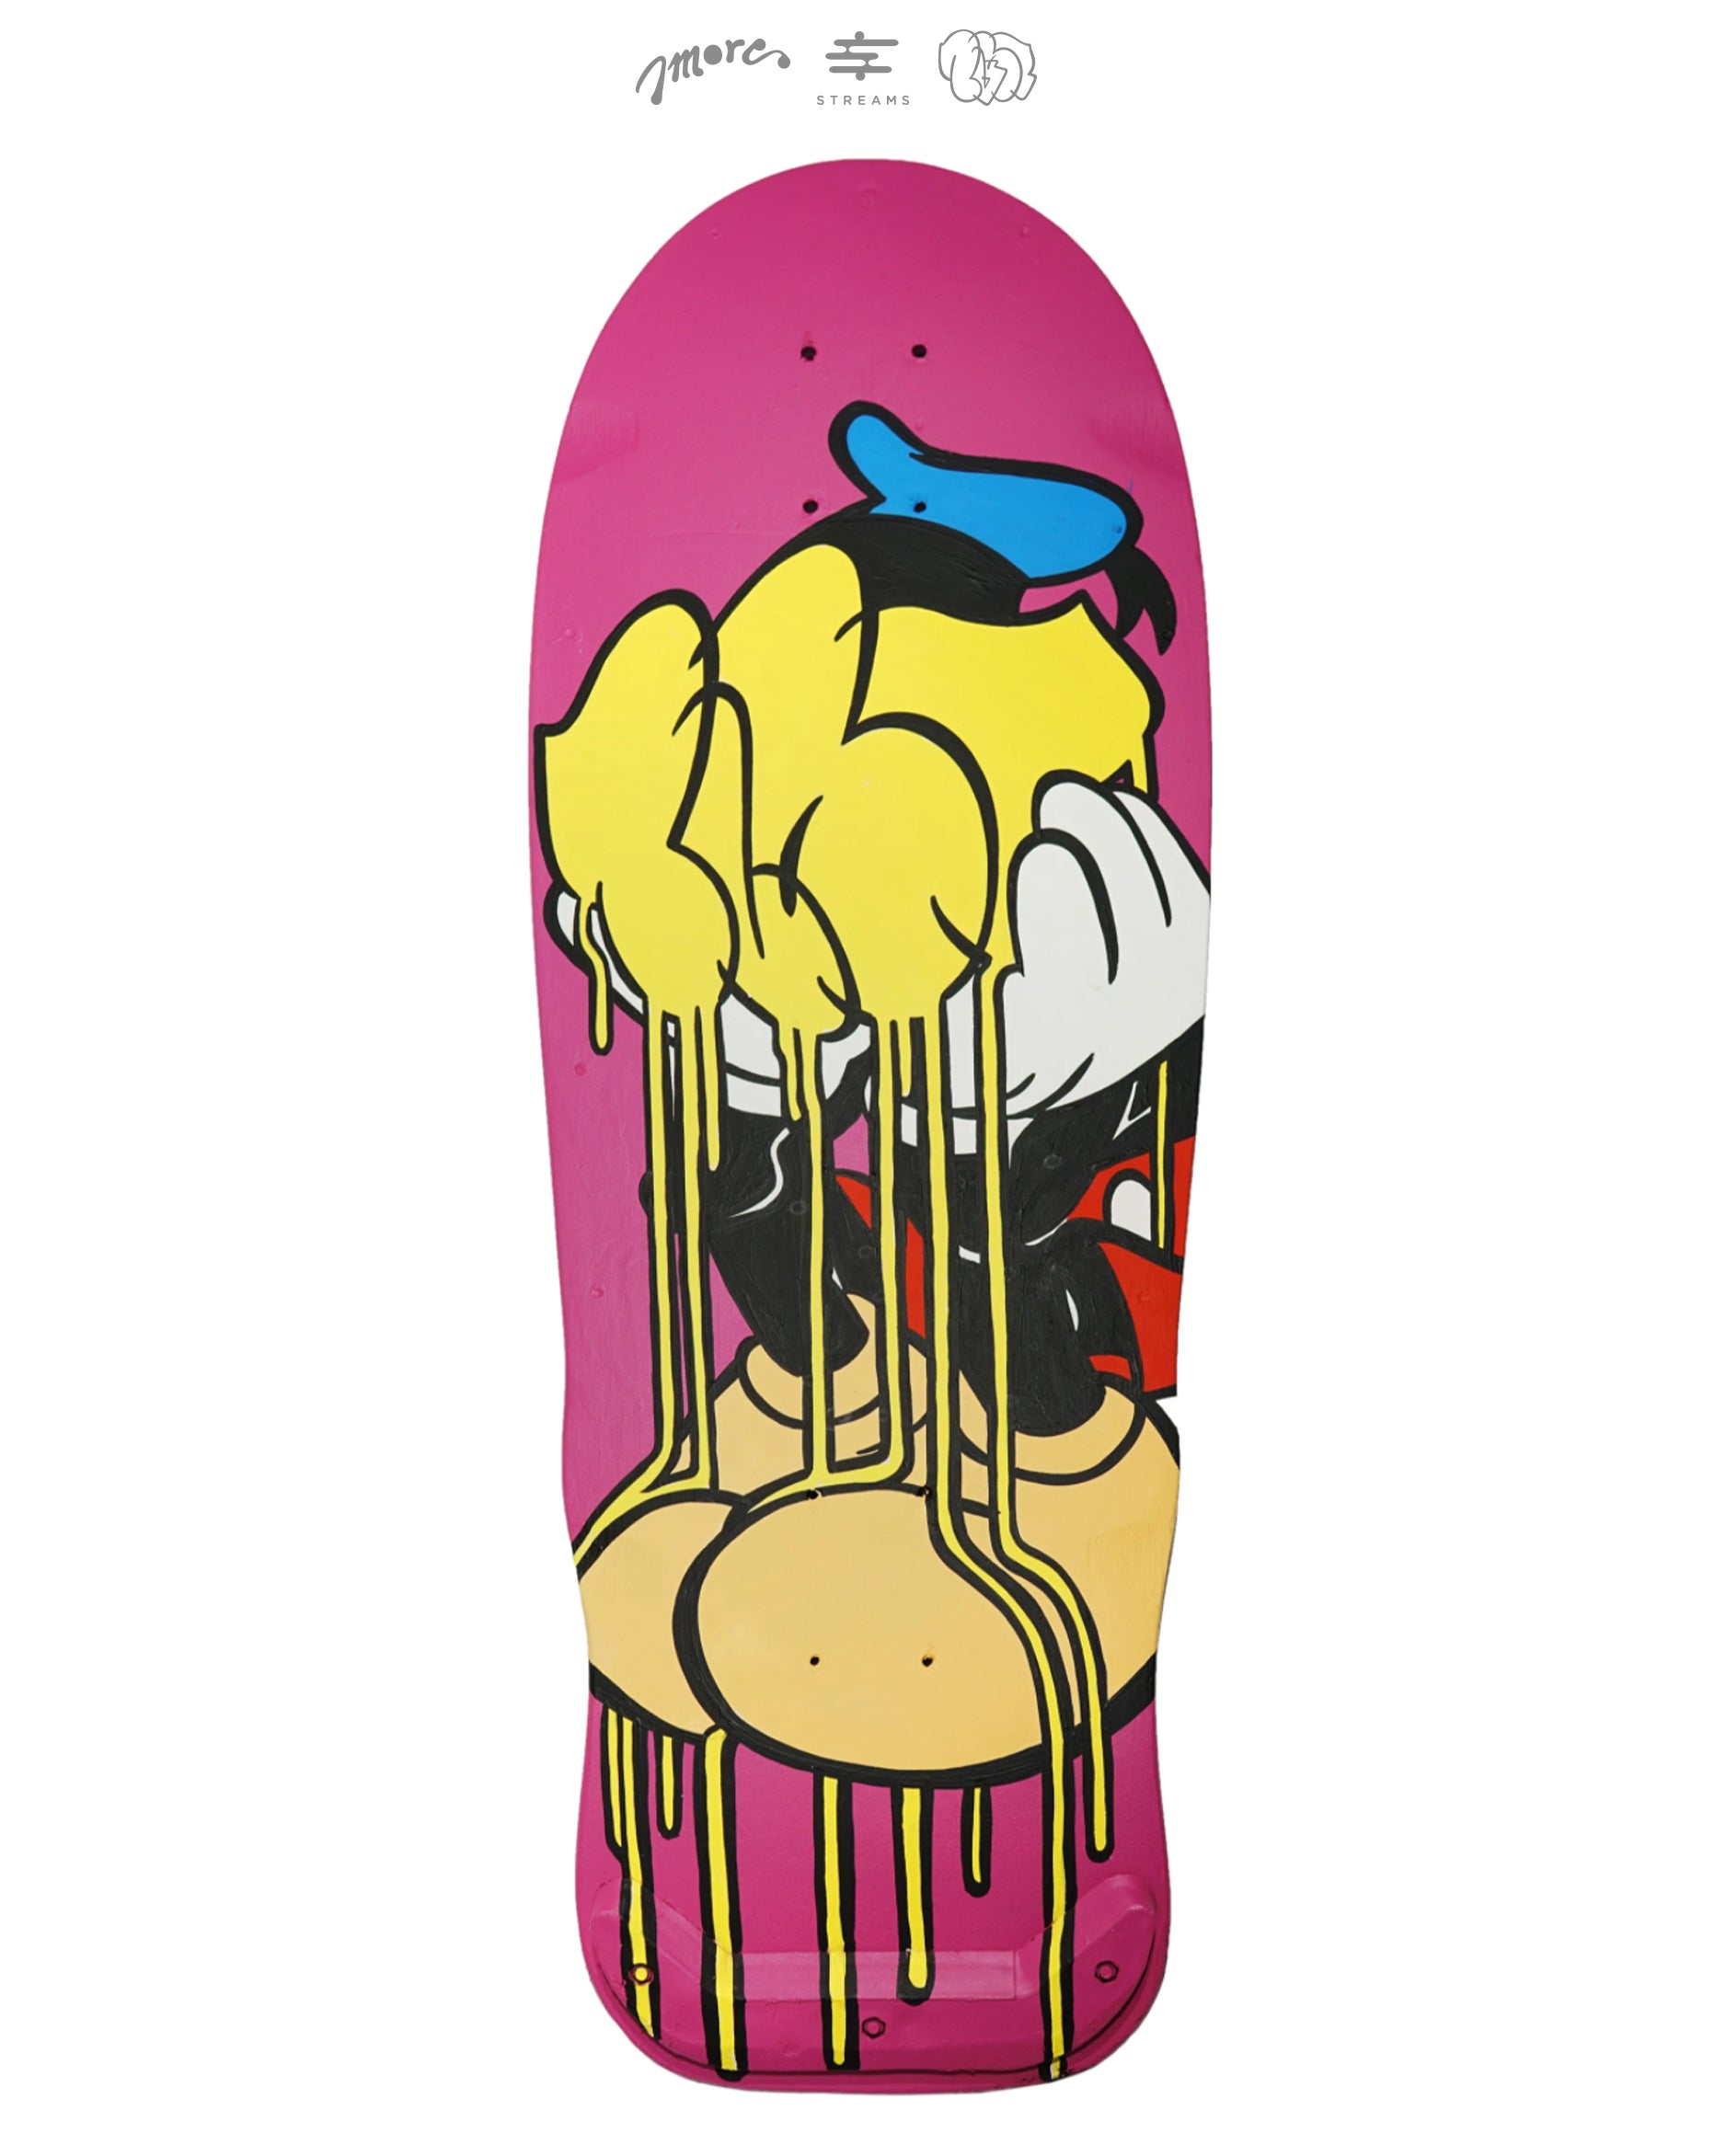 BUSTART (Mr. Pop Skateboard, #1, 2021)